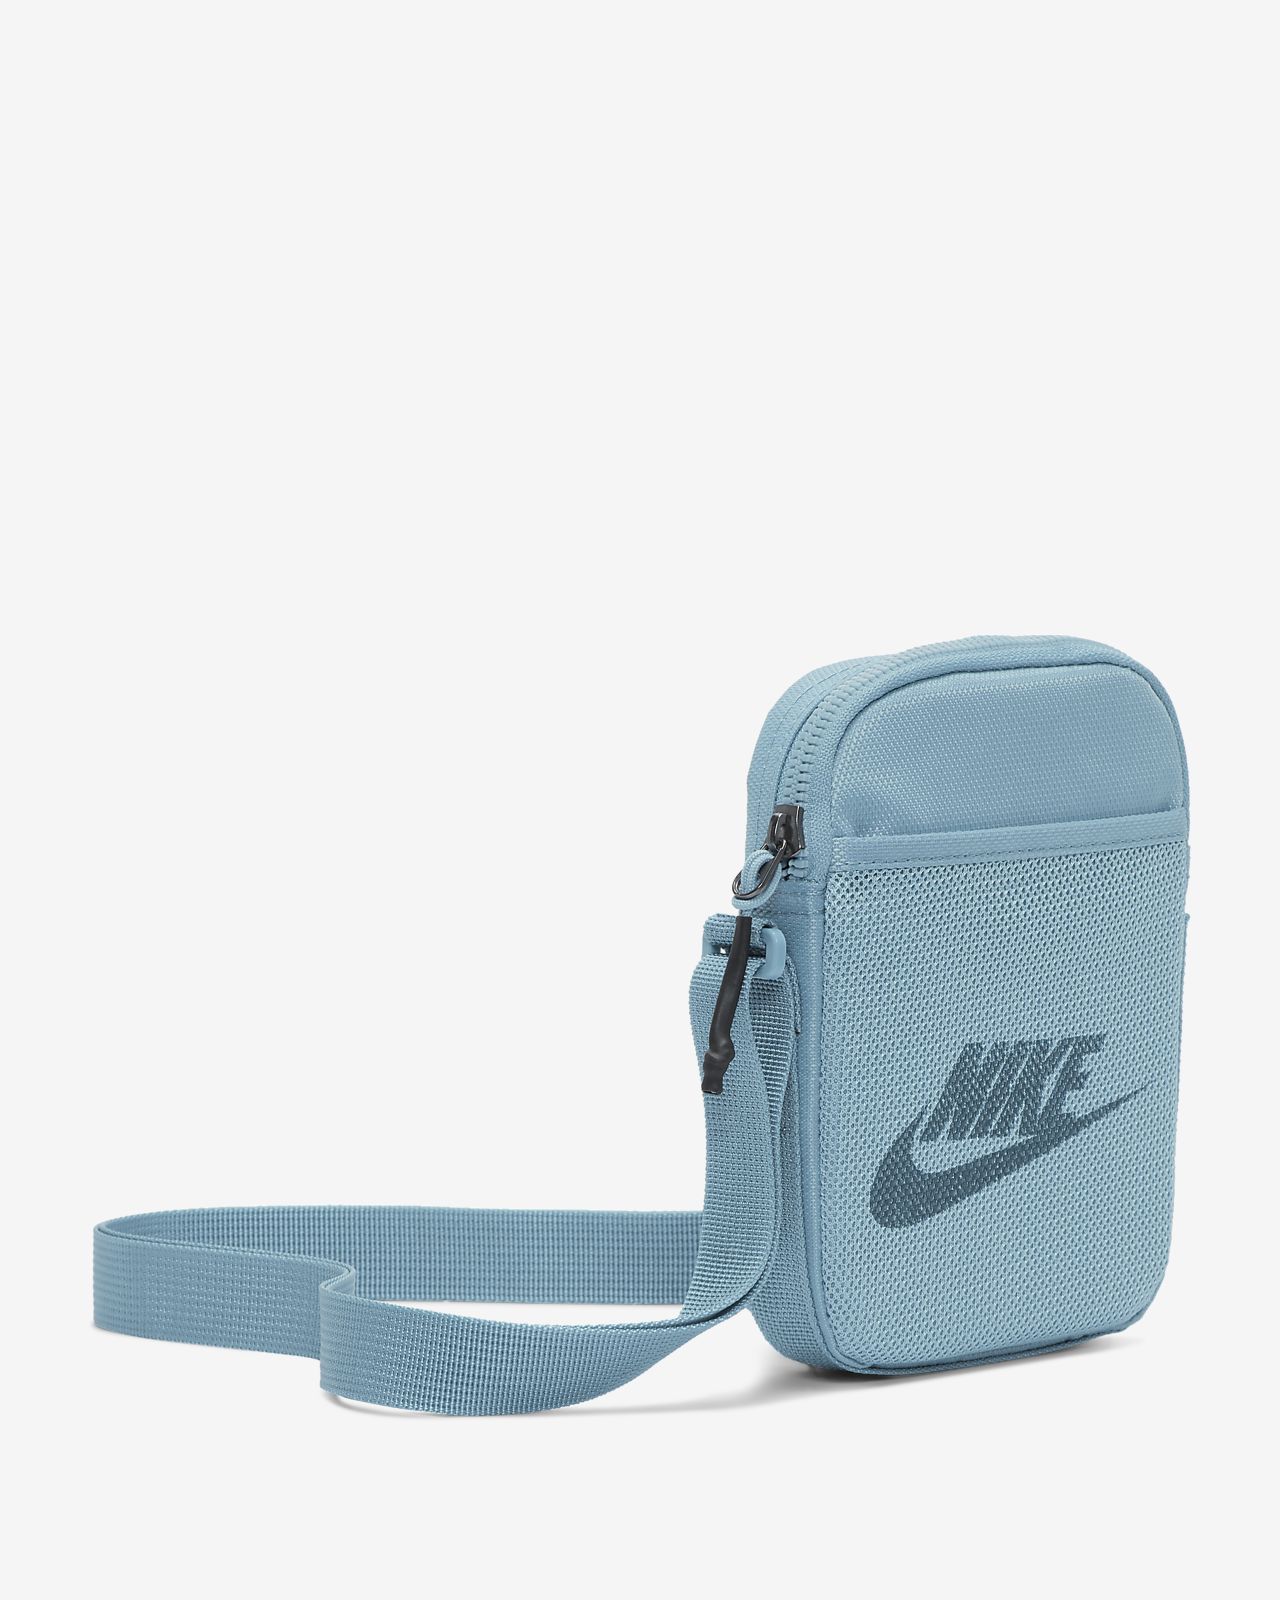 blue nike crossbody bag